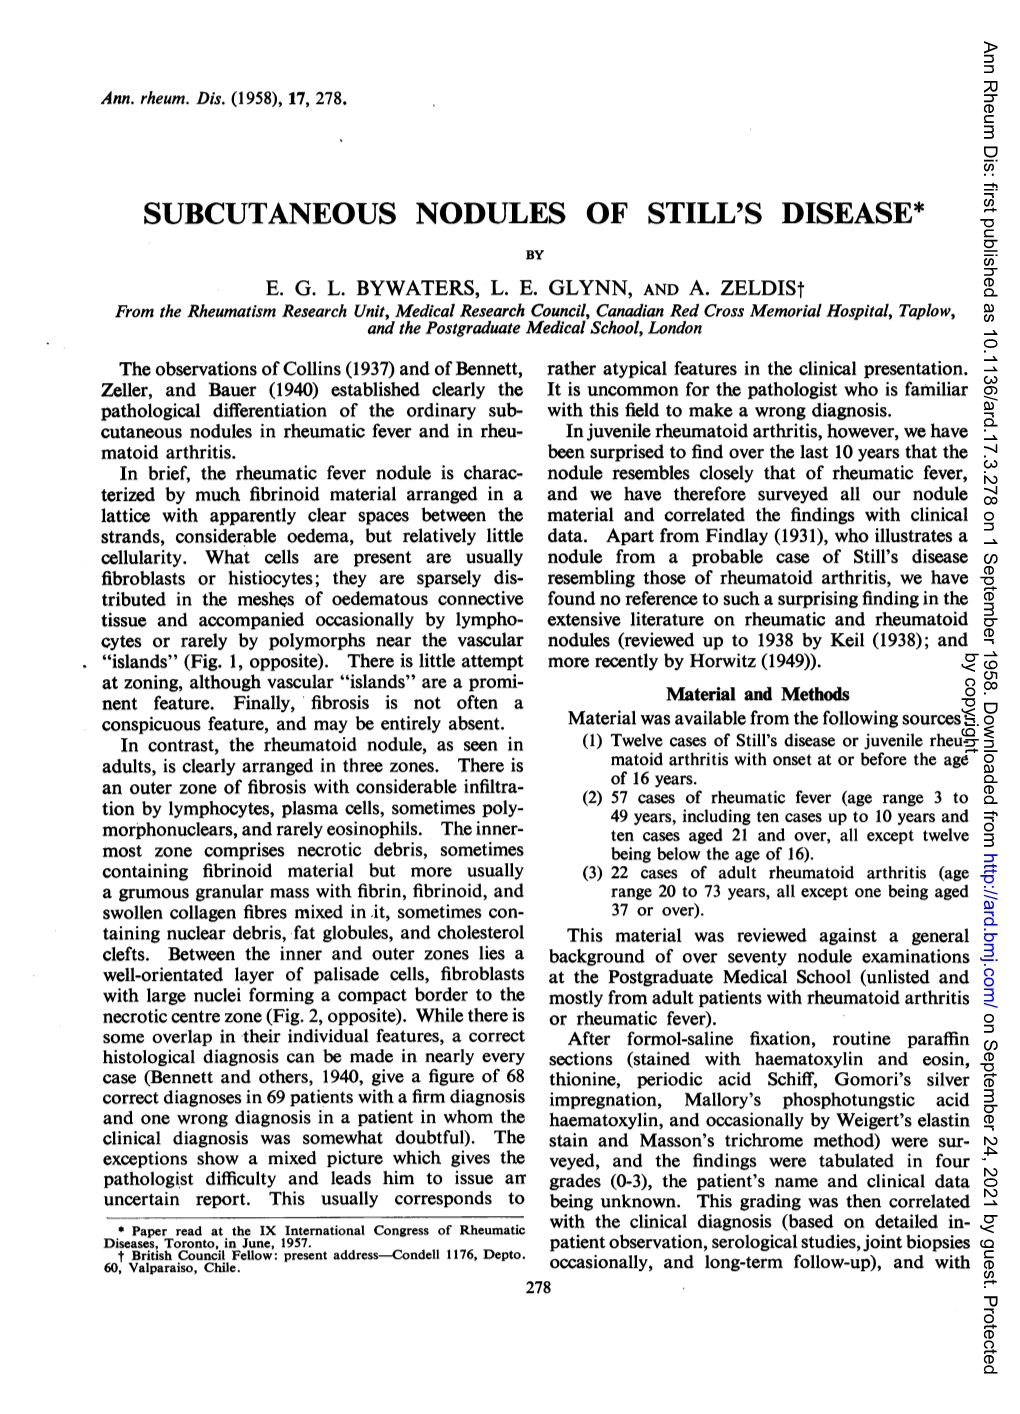 Subcutaneous Nodules of Still's Disease*